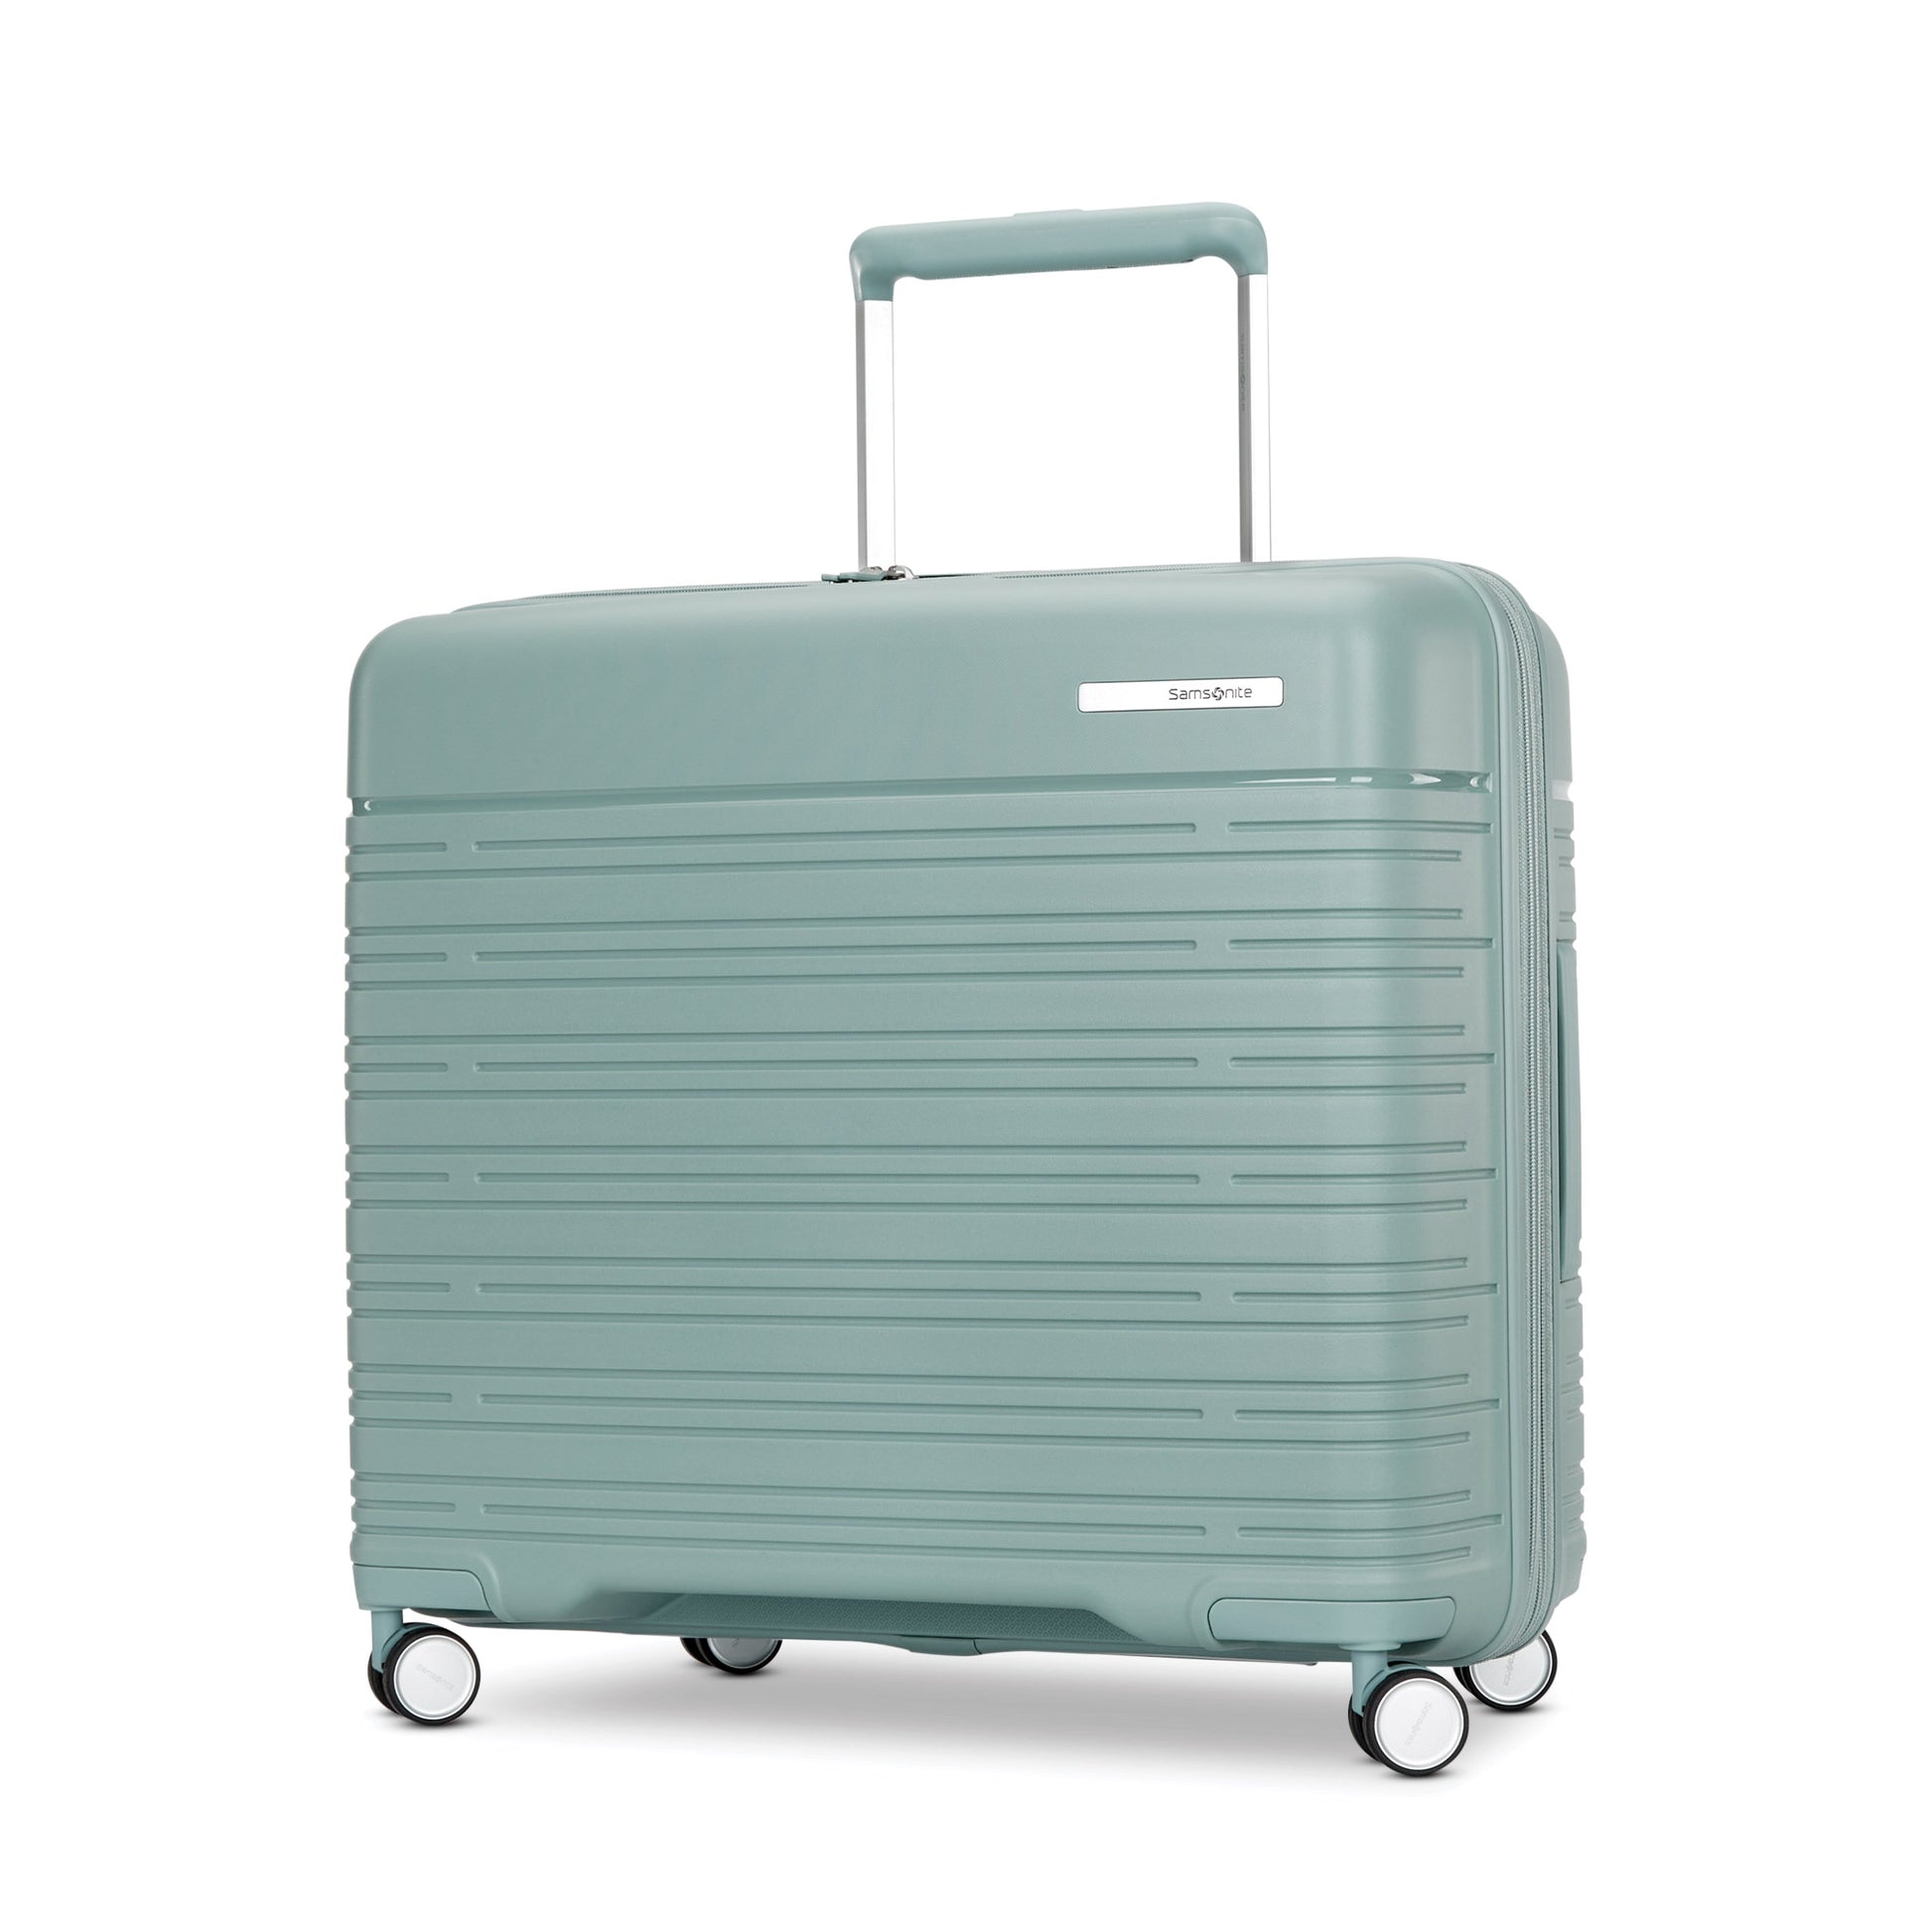 Samsonite Elevation Plus Medium Expandable Glider Luggage - Cypress Green